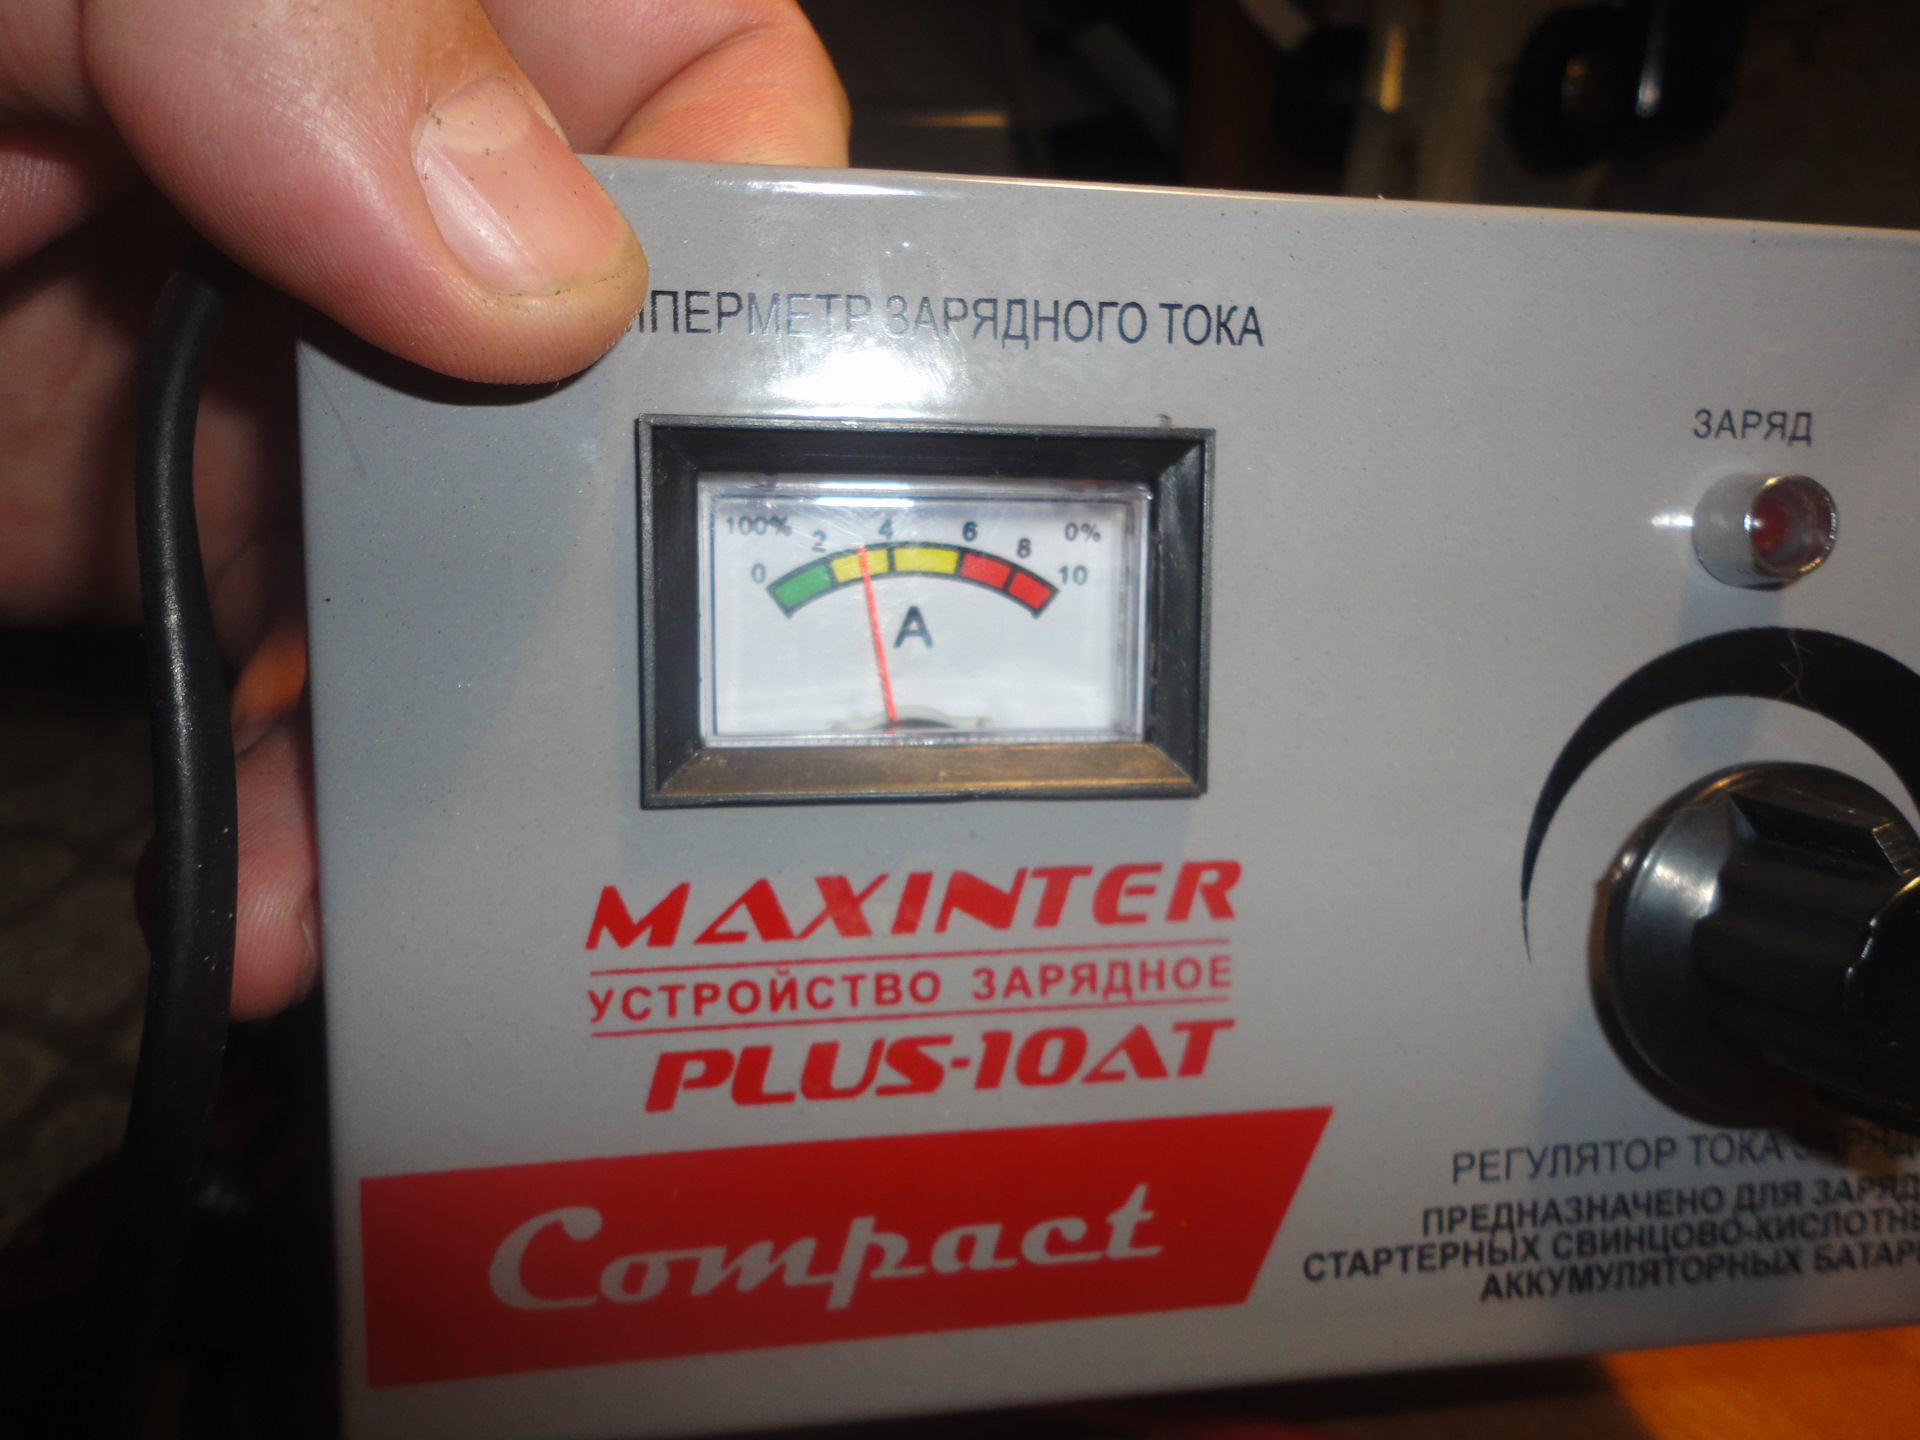 Максинтер зарядное. Зарядное устройство ЗУ Maxinter Plus-15. Зарядное Maxinter 10a. Plus-10 АТ зарядное у-во Plus-10 АТ Maxinter. Схема зарядного устройства Maxinter Plus-10a.